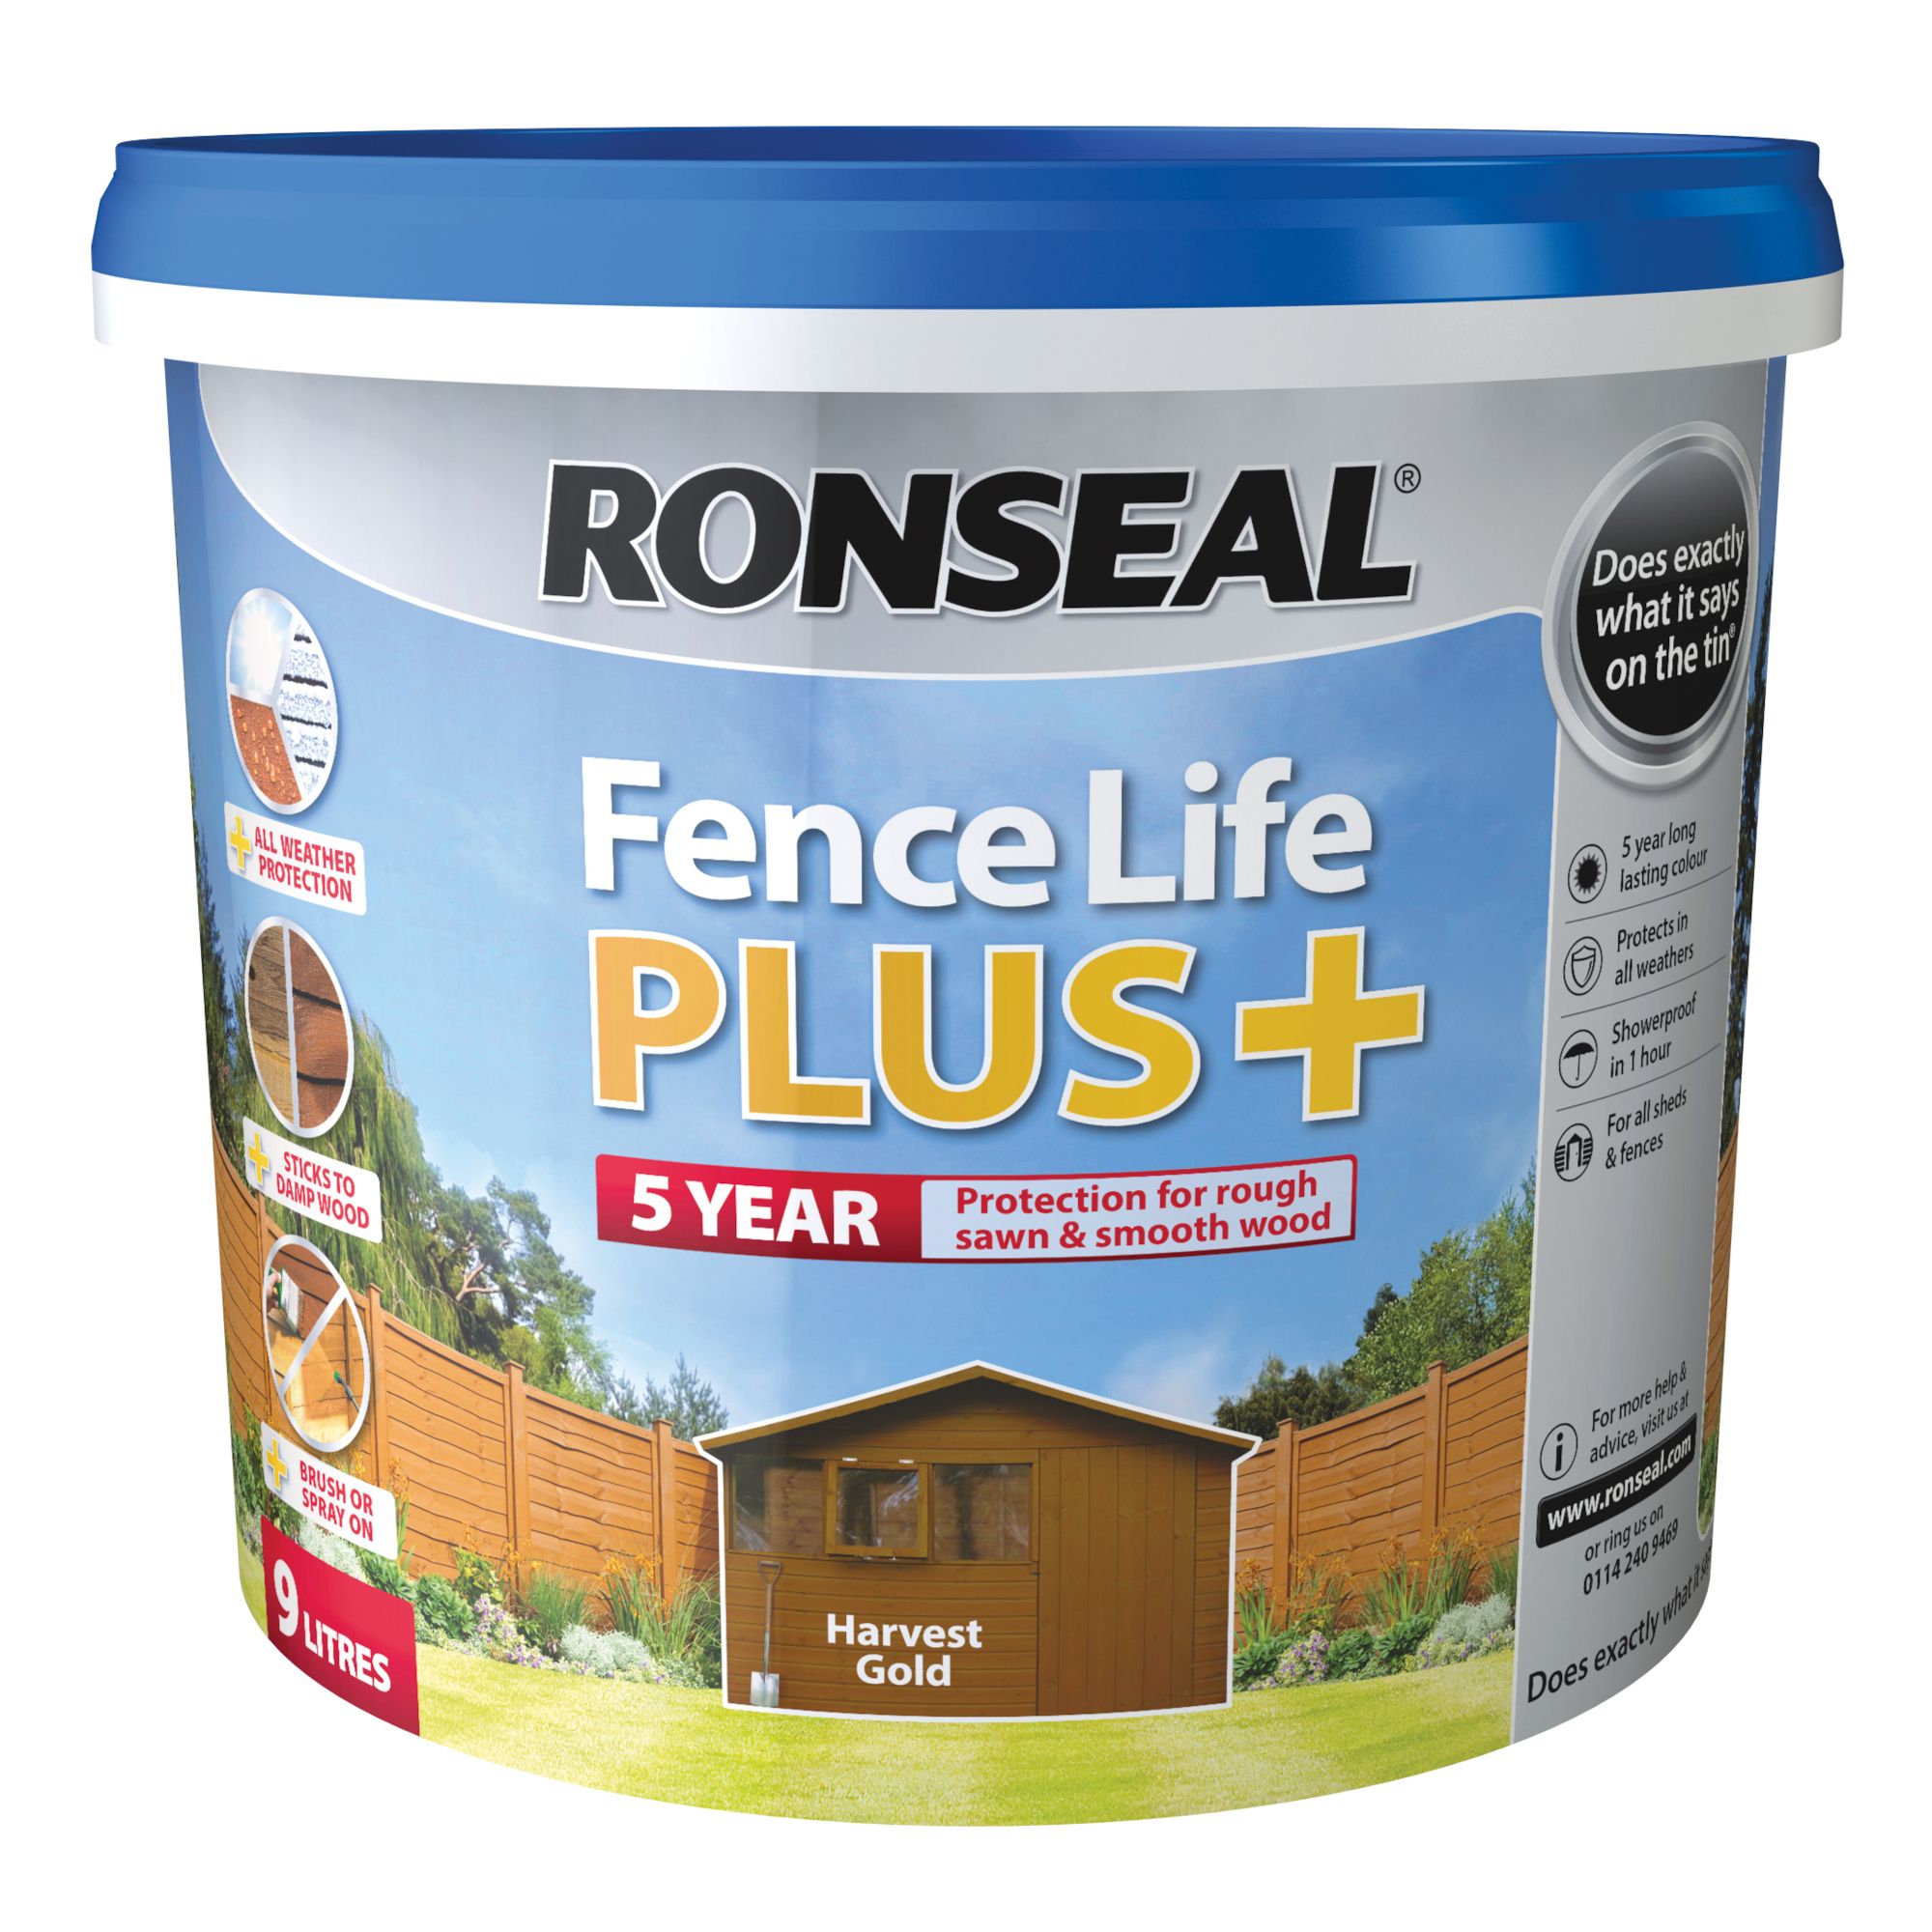 Ronseal Fence Life Plus Harvest gold Matt Exterior Wood paint, 9L Tub